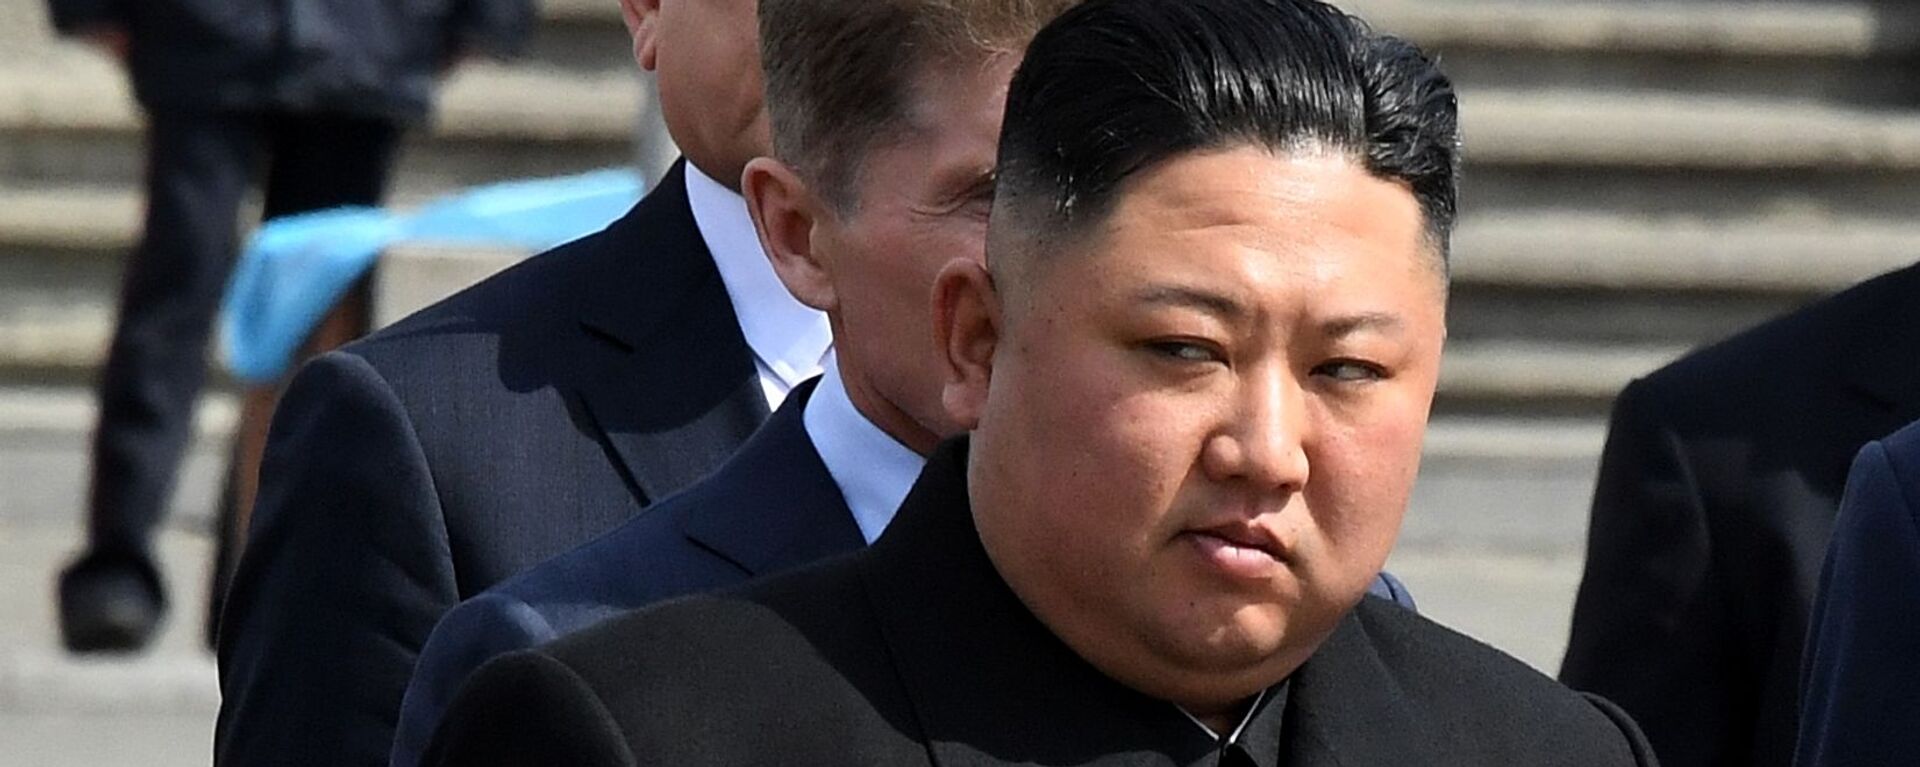 Kim Jong-un, líder de Corea del Norte (archivo) - Sputnik Mundo, 1920, 18.03.2021